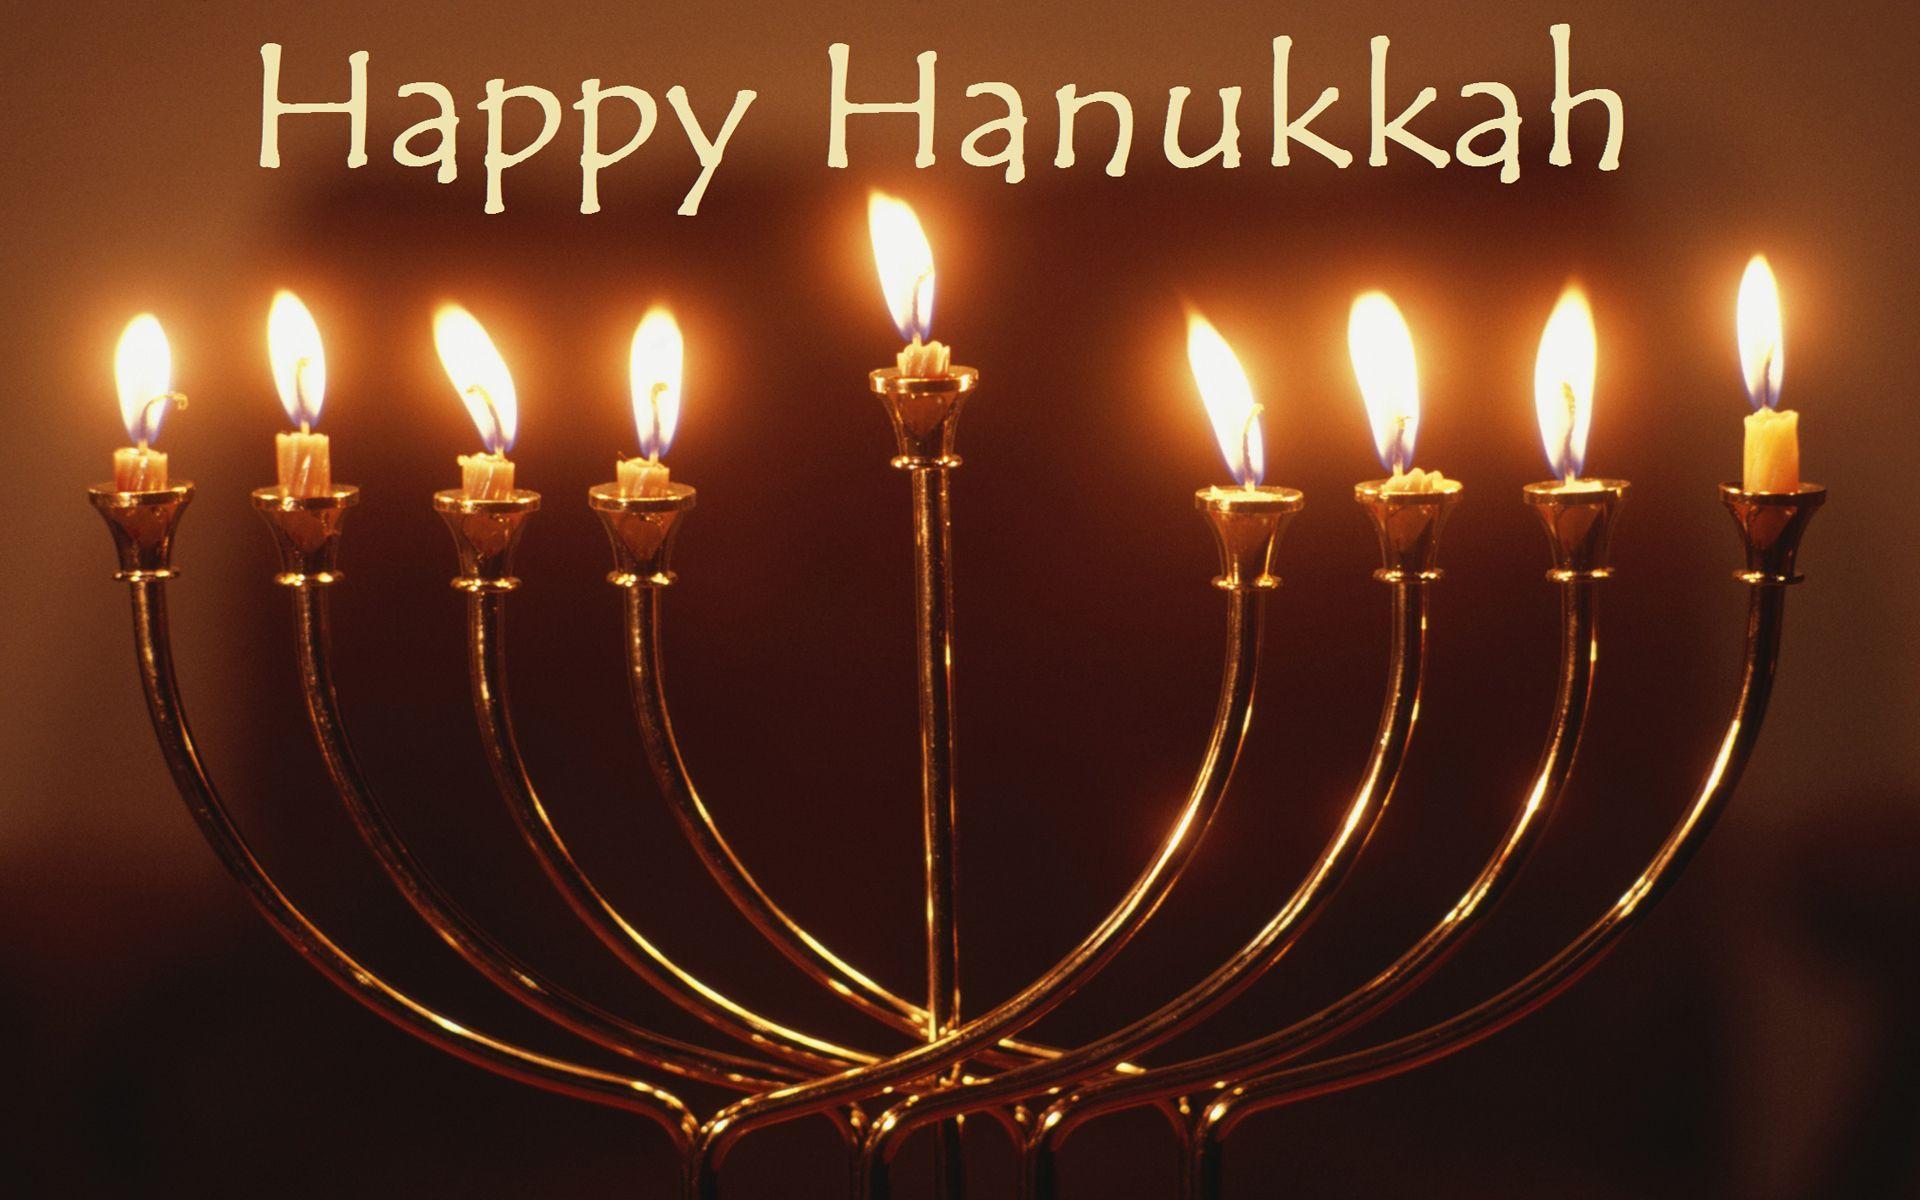 Happy Hanukkah 2014 background, wallpaper, Happy Hanukkah 2014